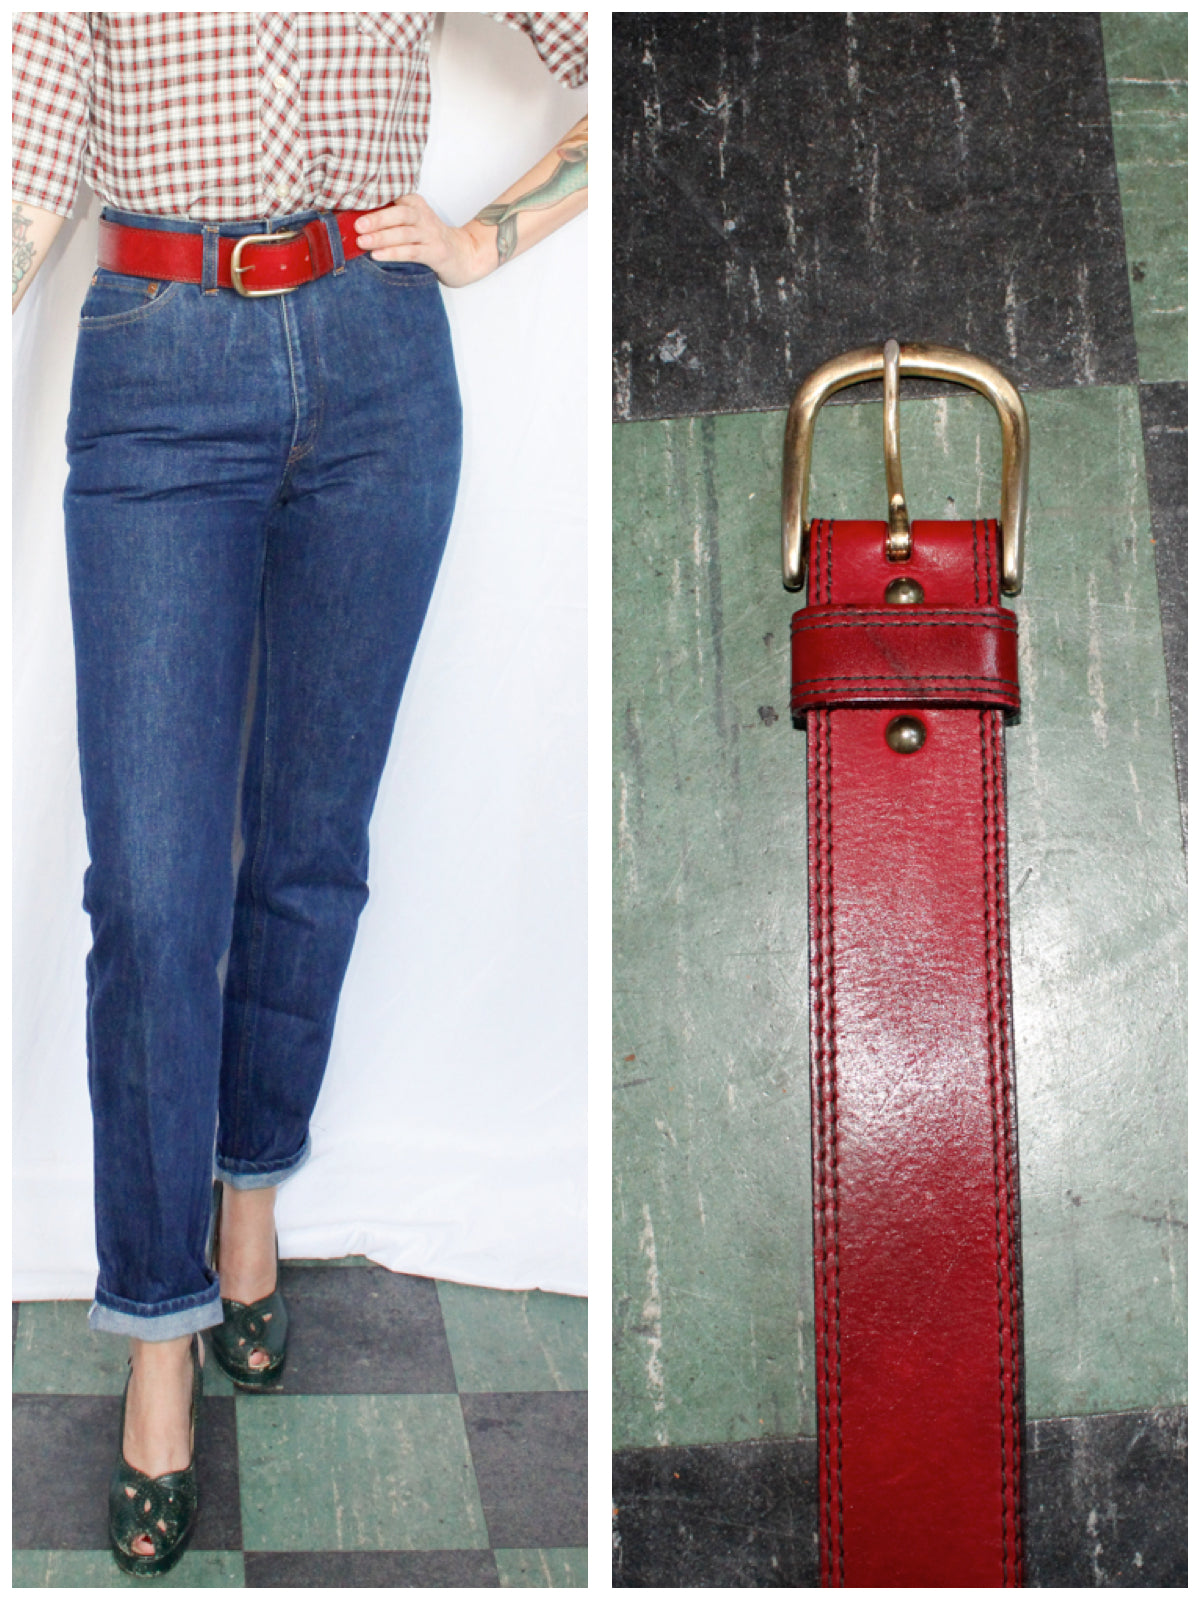 1970s Oxblood Red Leather Belt - M/L